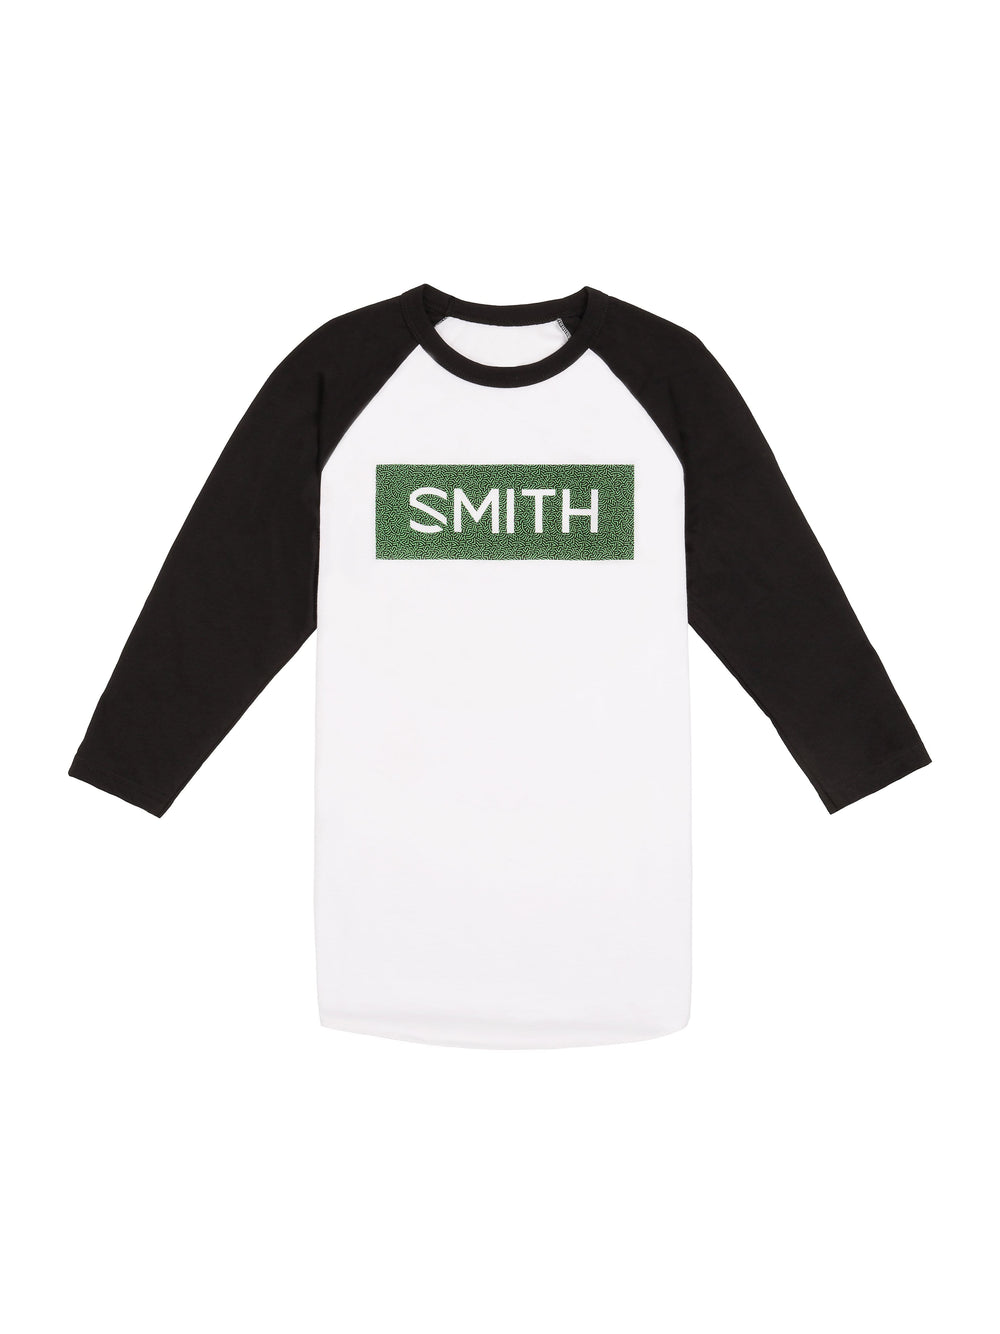 SMITH Long Sleeve T-Shirt